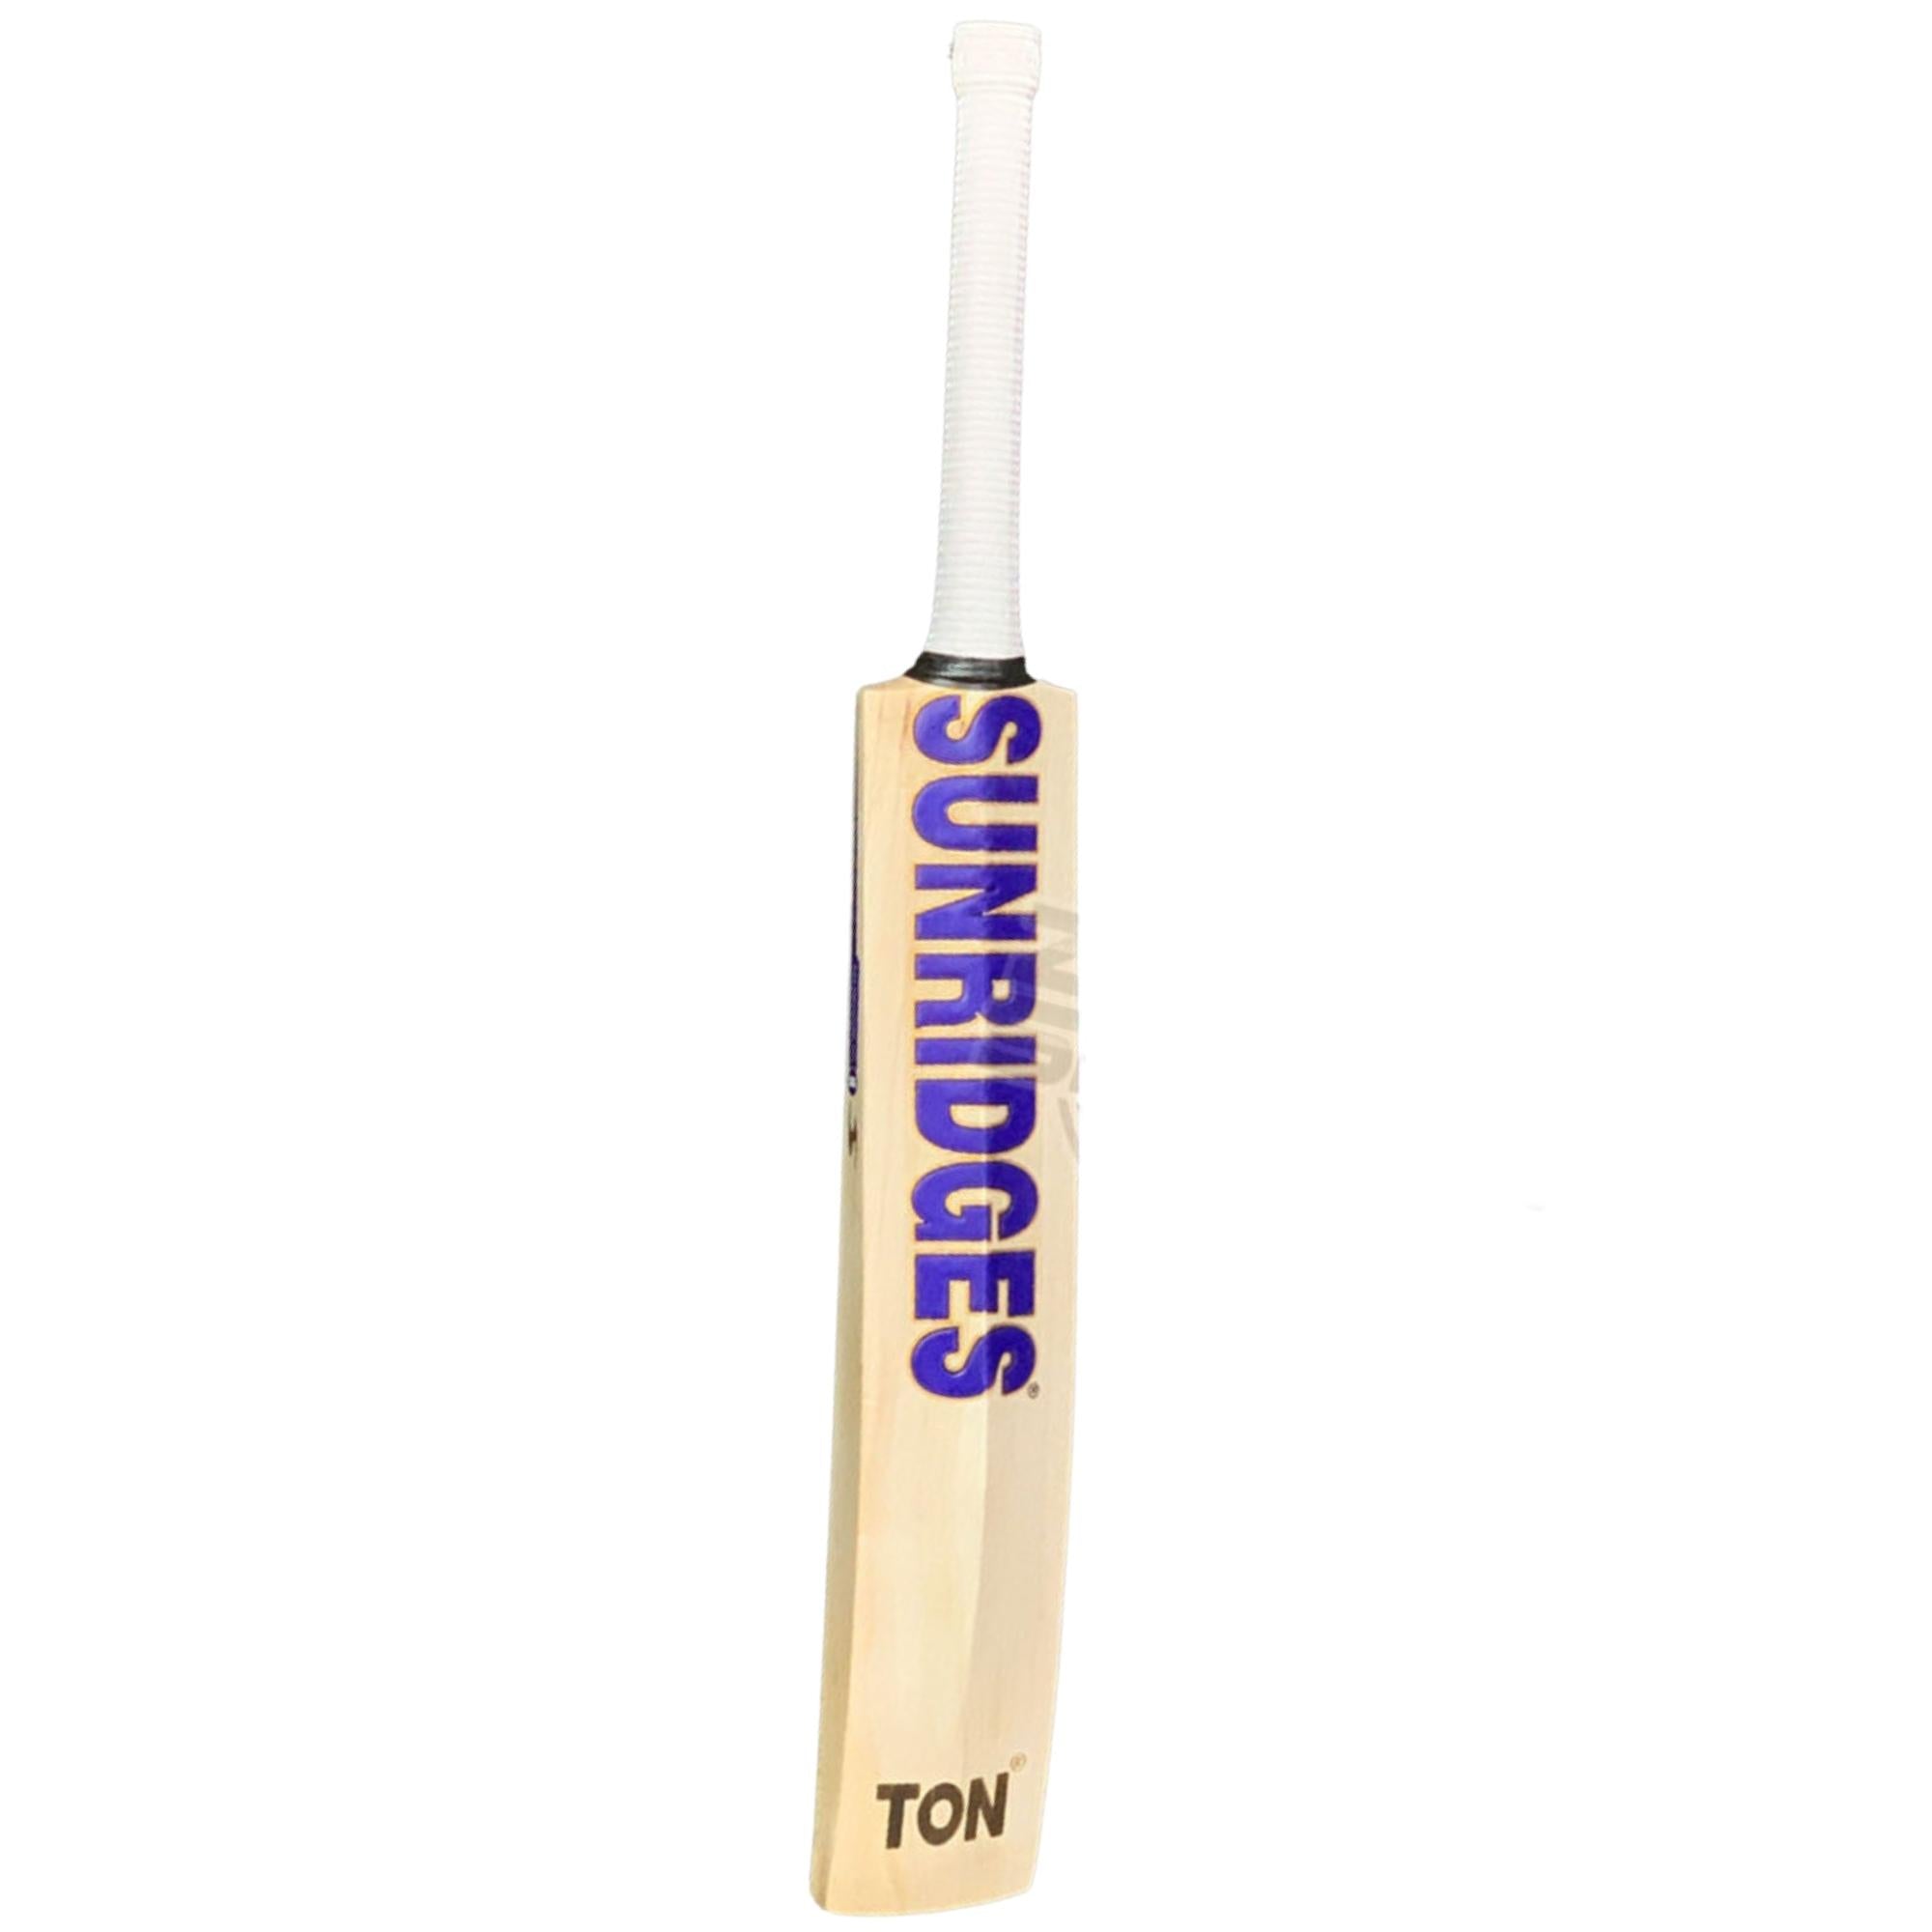 SS Ton Sunridges Max Power Retro Classic Cricket Bat